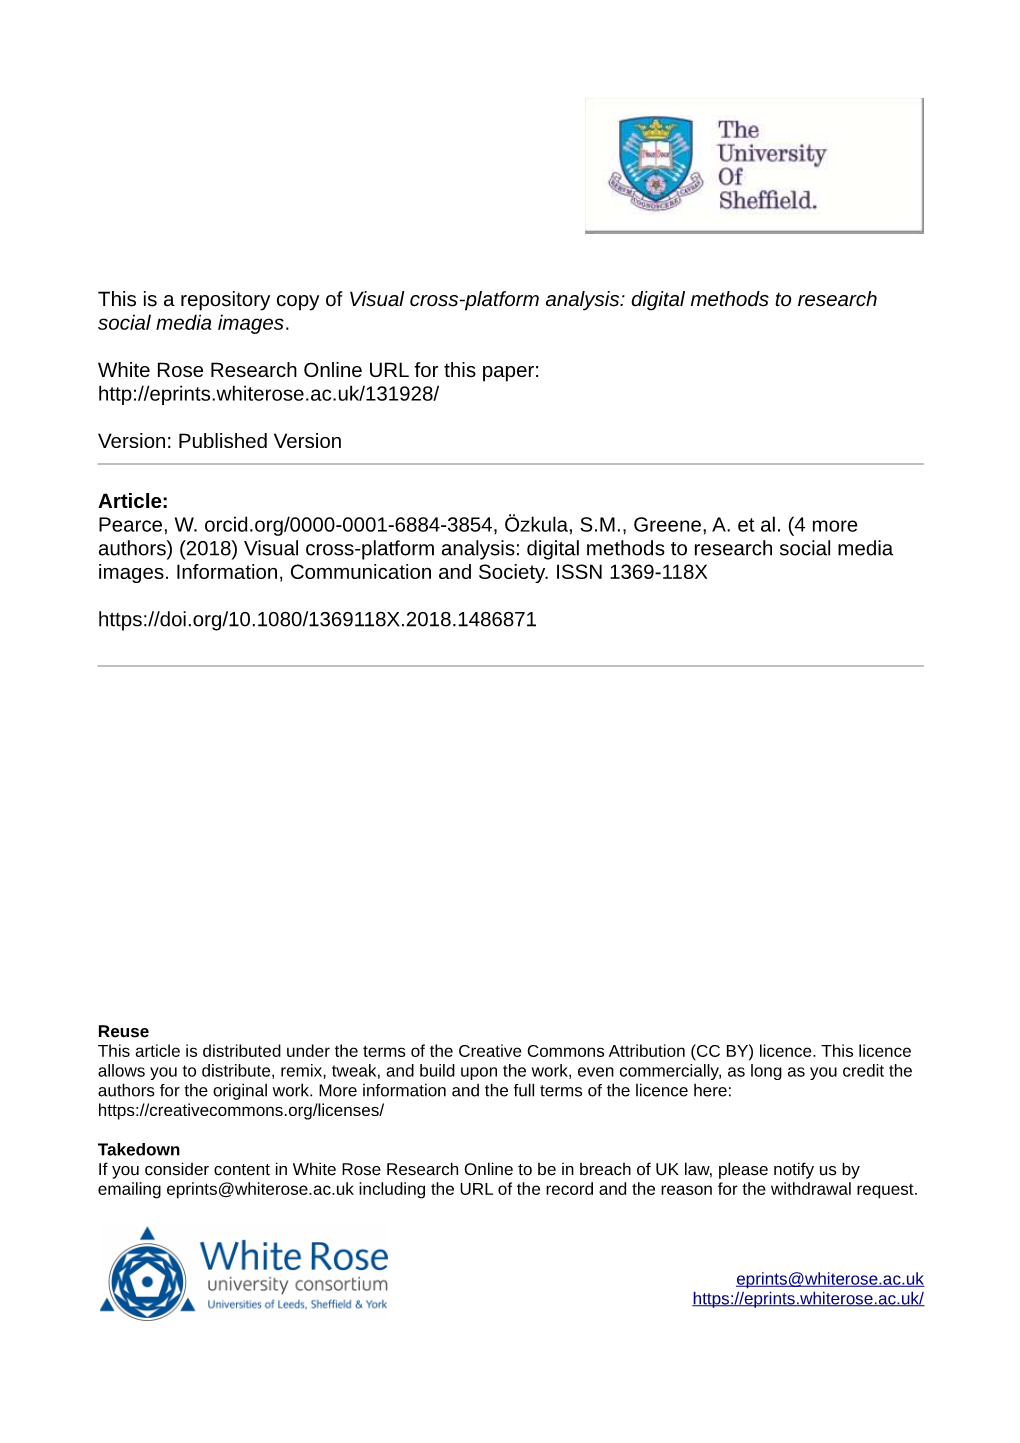 Visual Cross-Platform Analysis: Digital Methods to Research Social Media Images